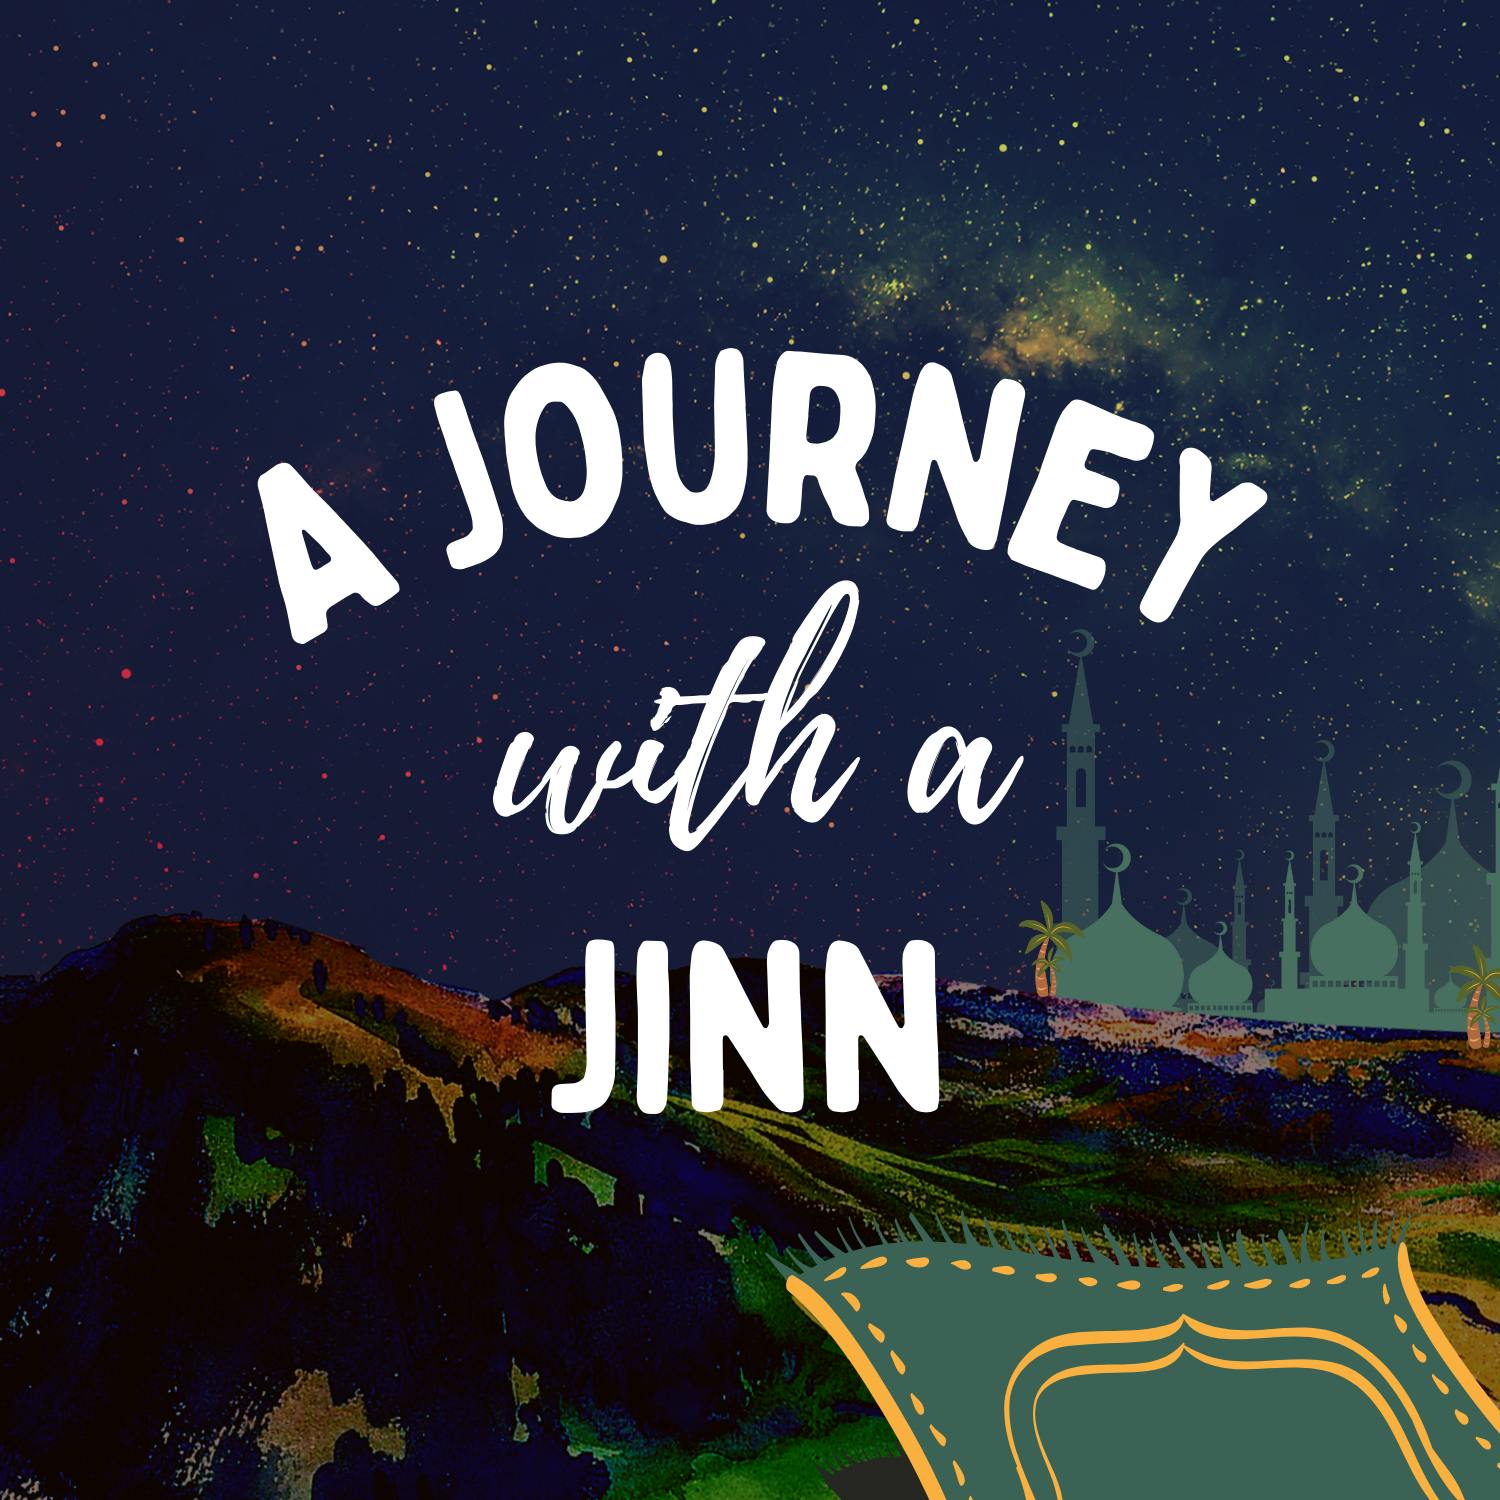 A Journey with a Jinn